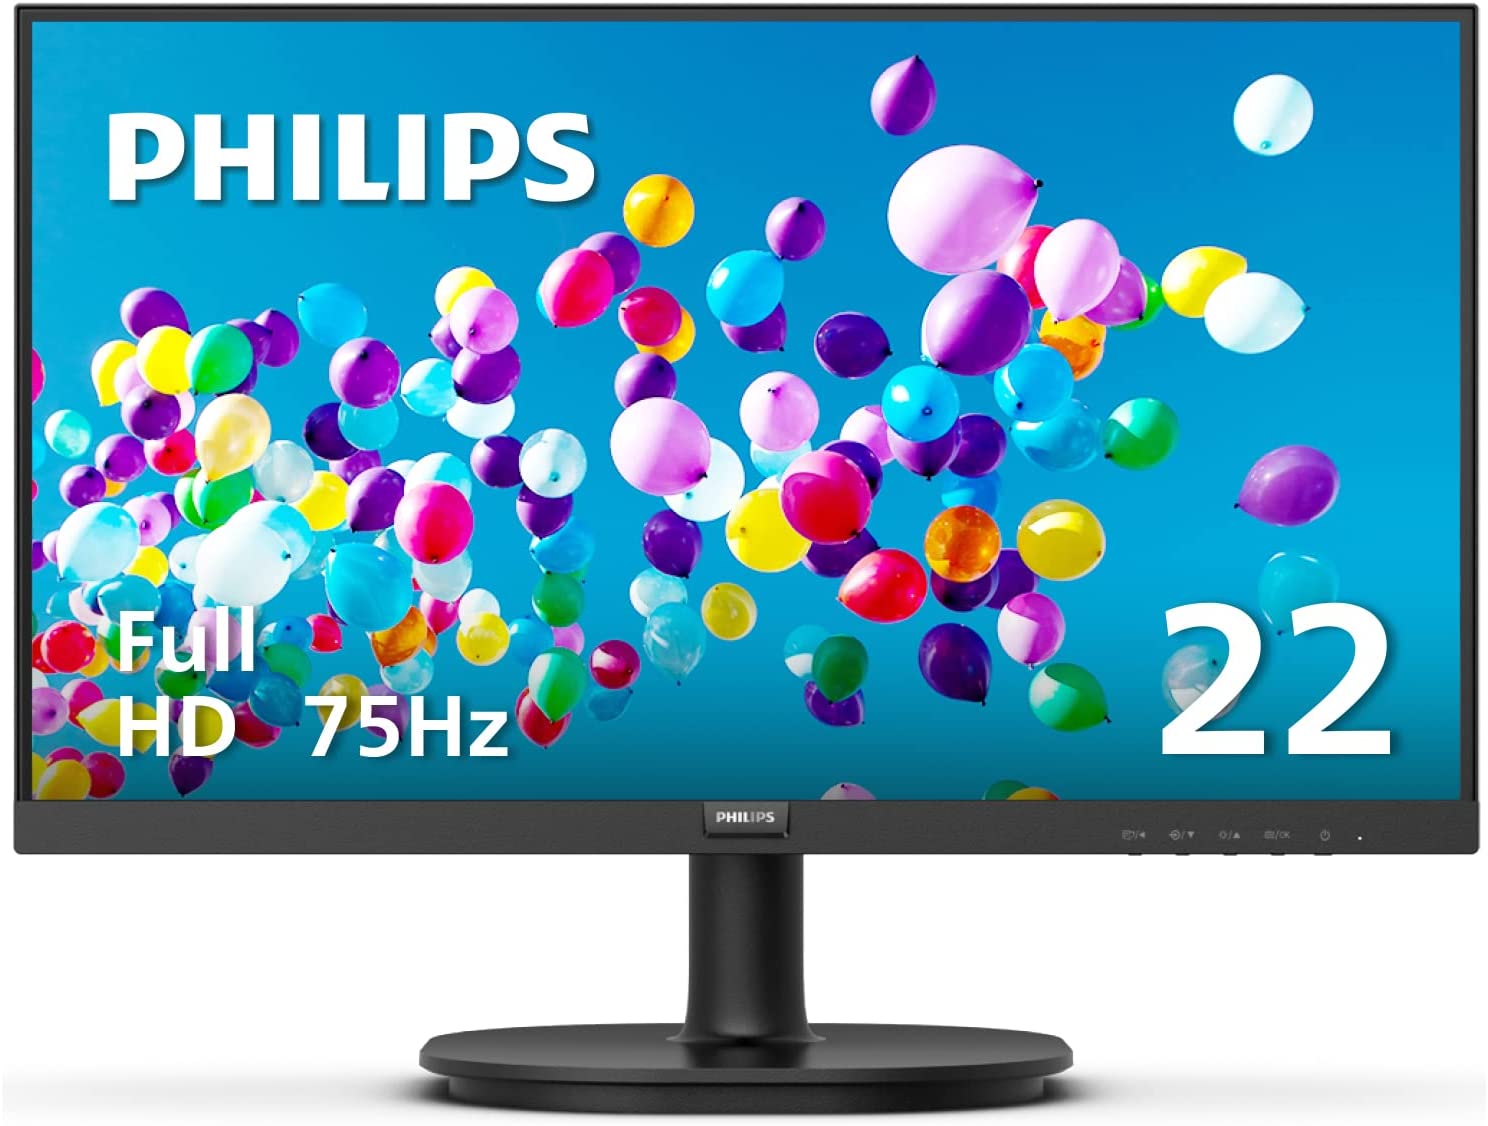 PHILIPS Computer Monitors 22 inch Class Thin Full HD [...]